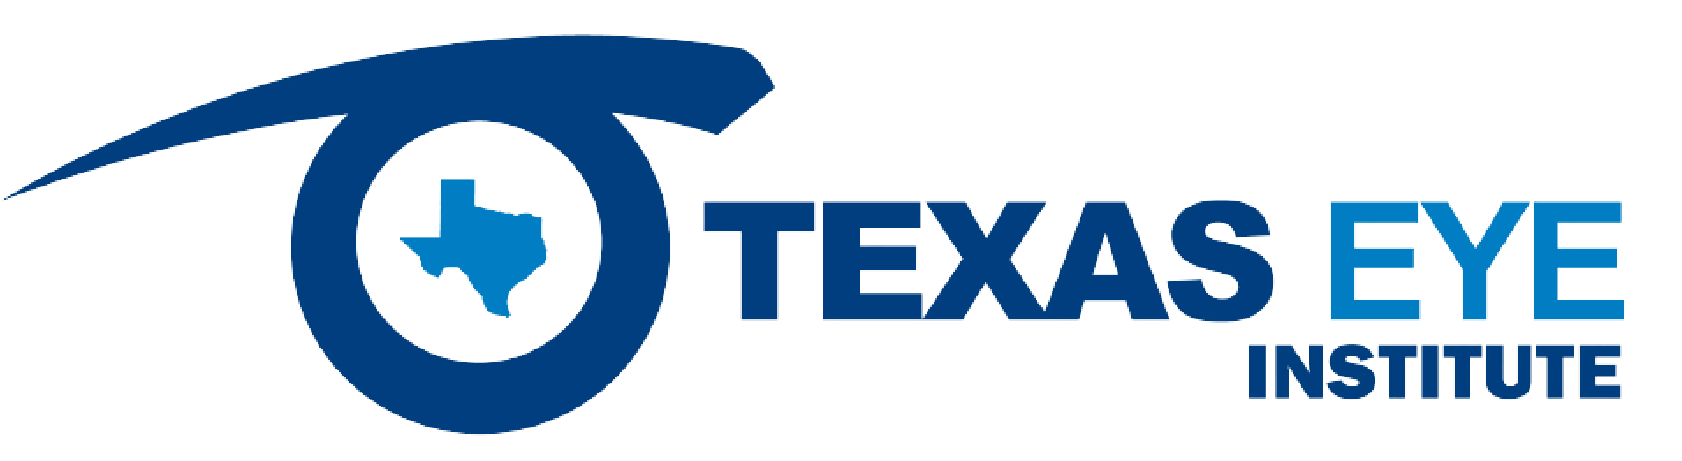 Texas Eye Institute logo